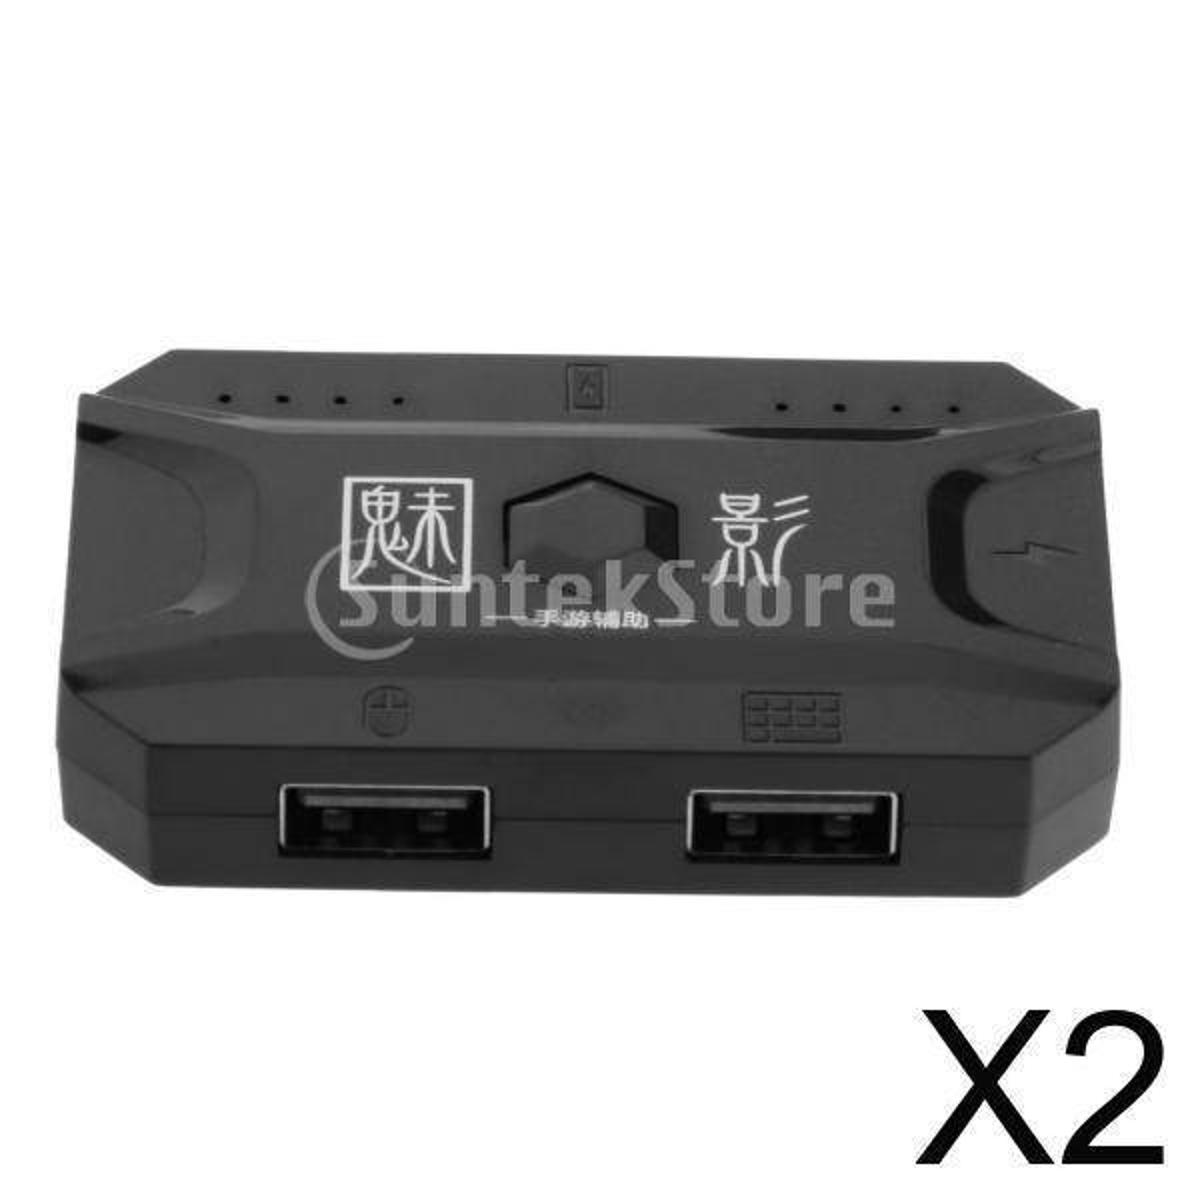 XIM Apex - Keyboard / Mouse Adapter - USB